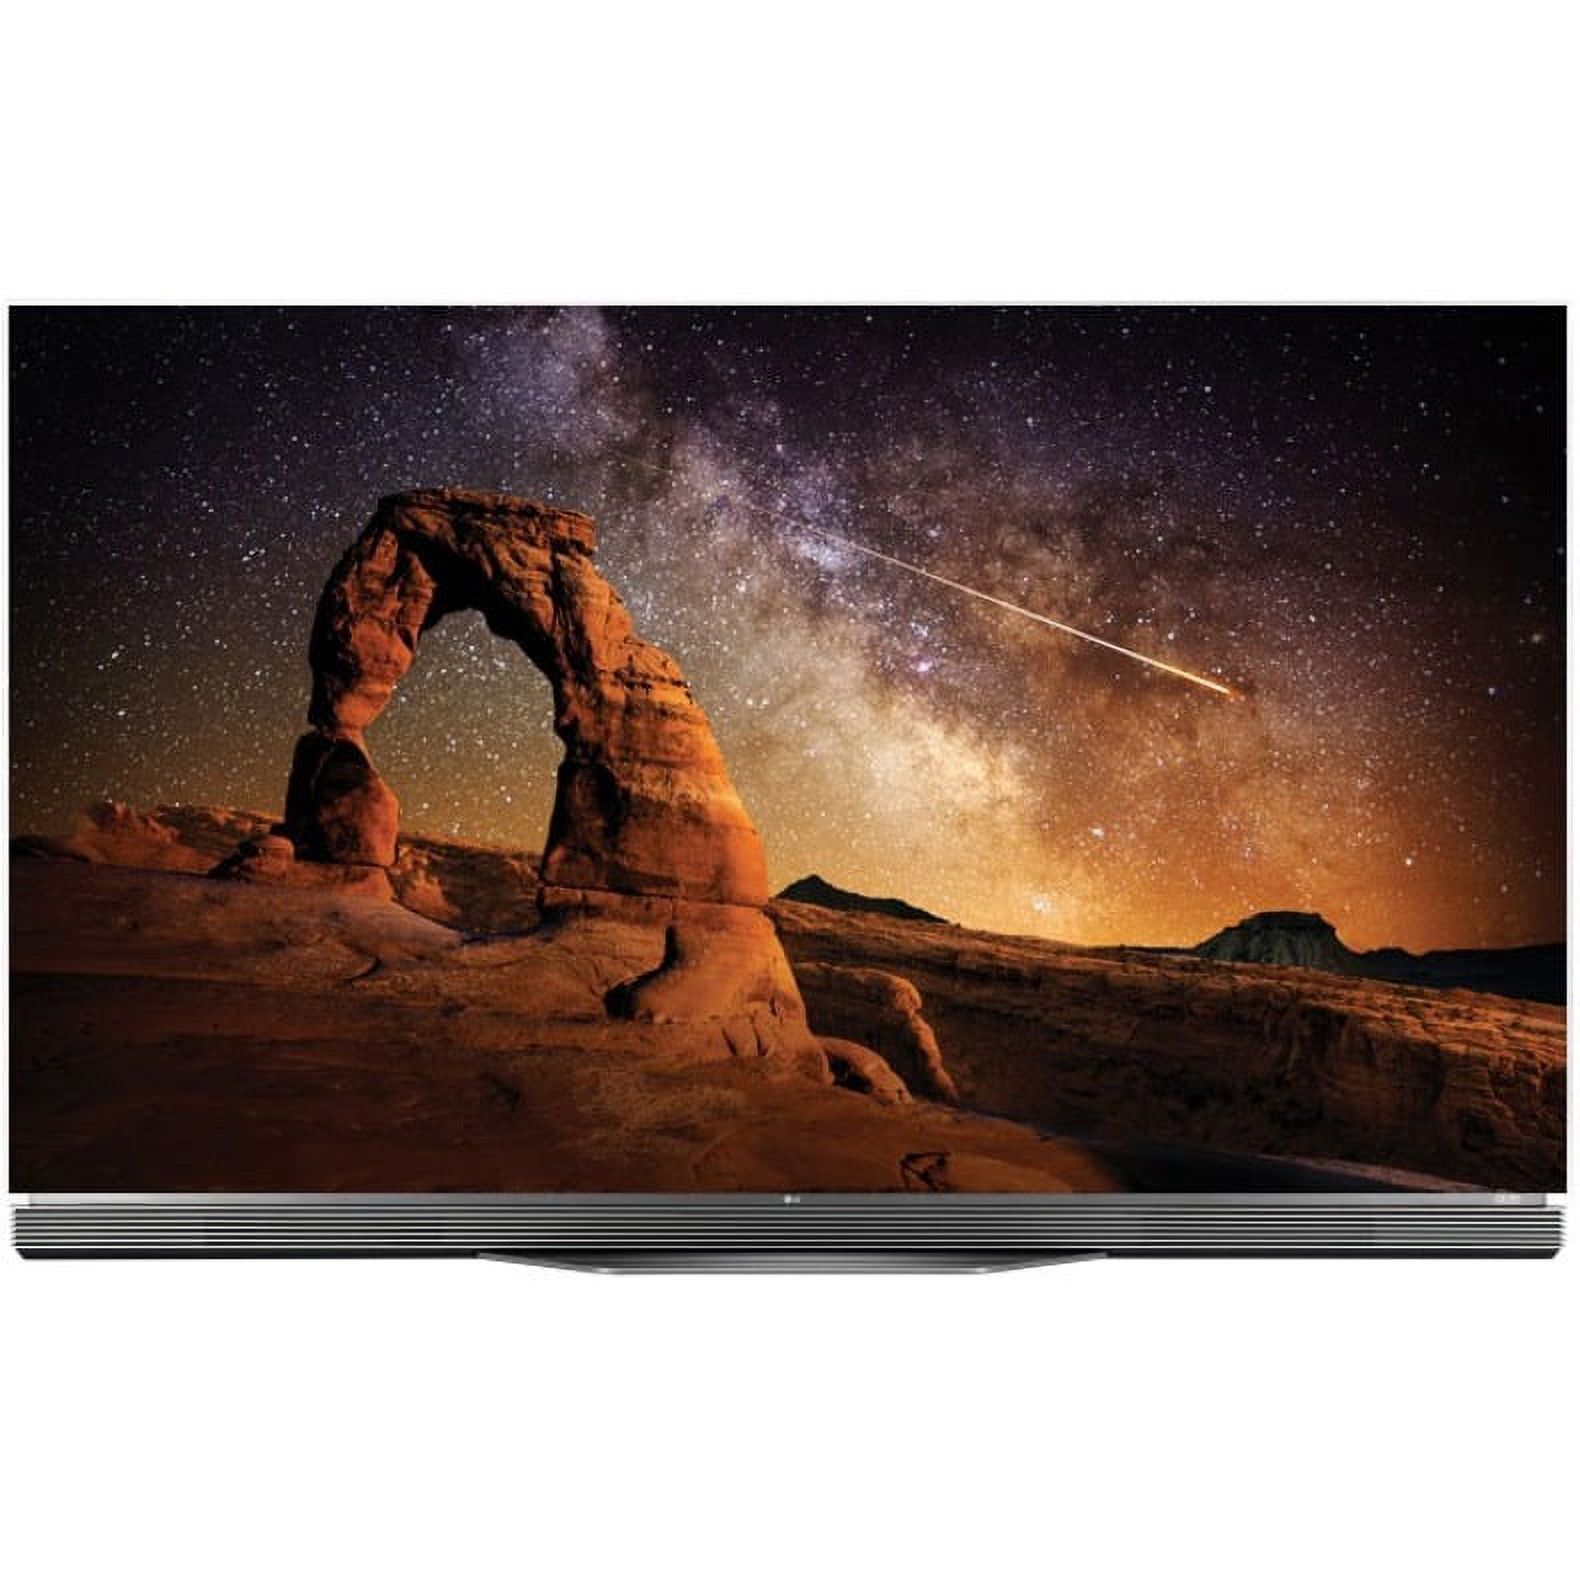 LG 55" Class 4K UHDTV (2160p) Smart OLED TV (OLED55E6P) - image 1 of 15